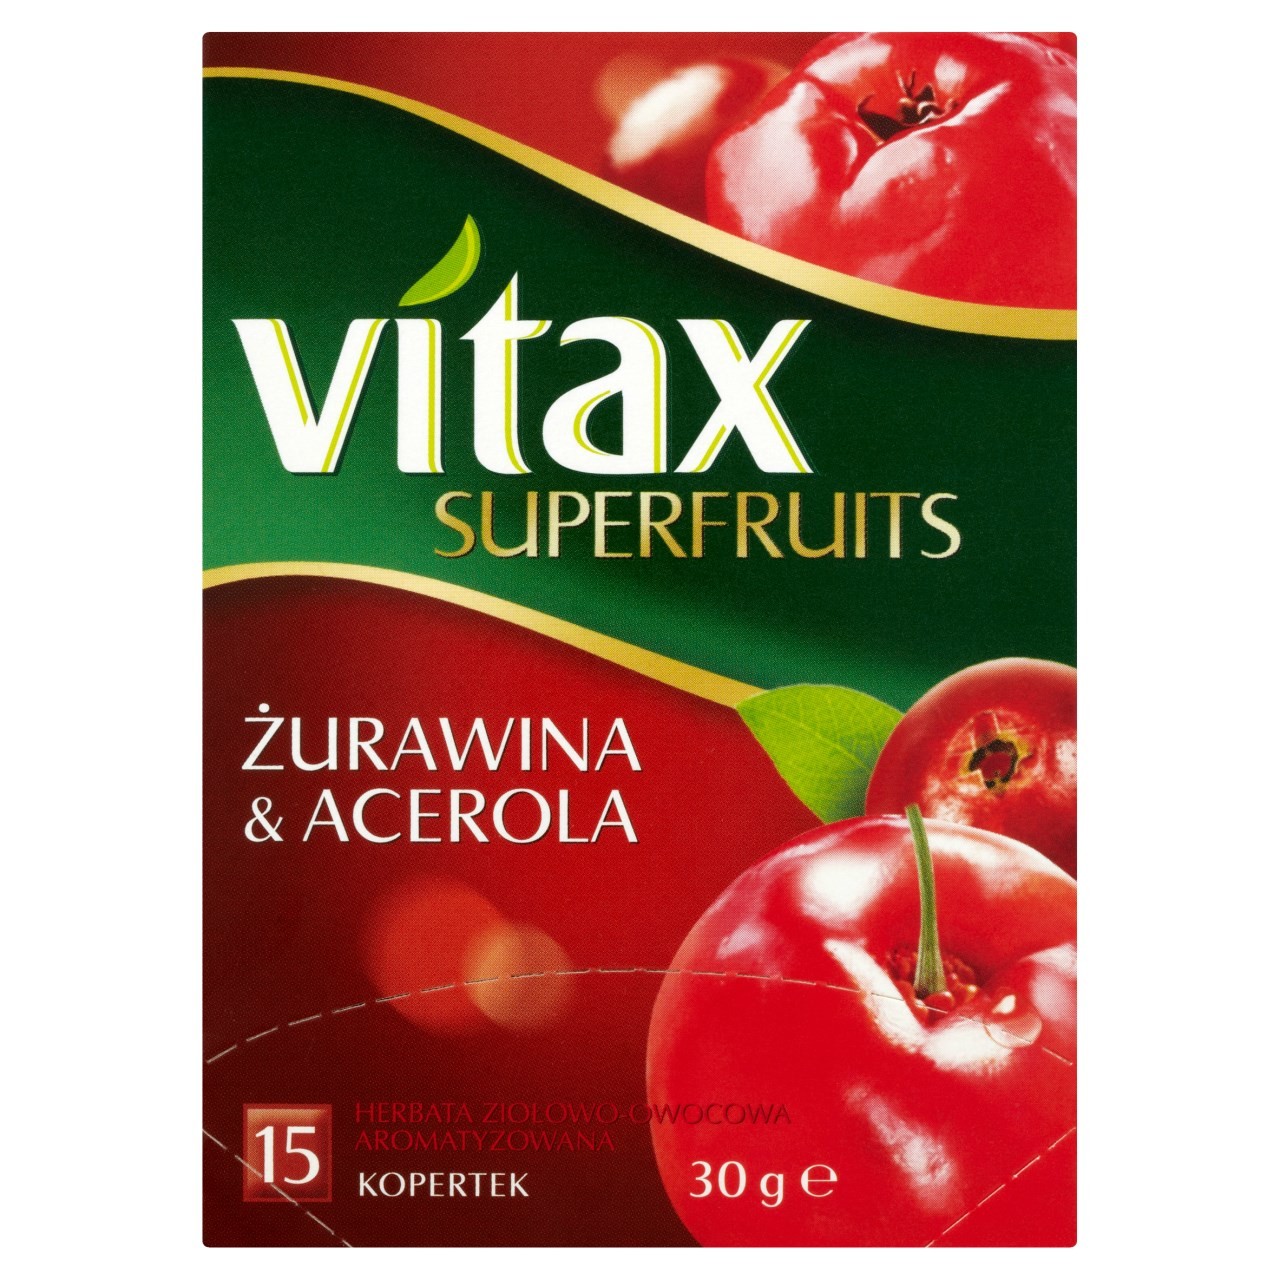 Vitax zurawina&acerola 30g